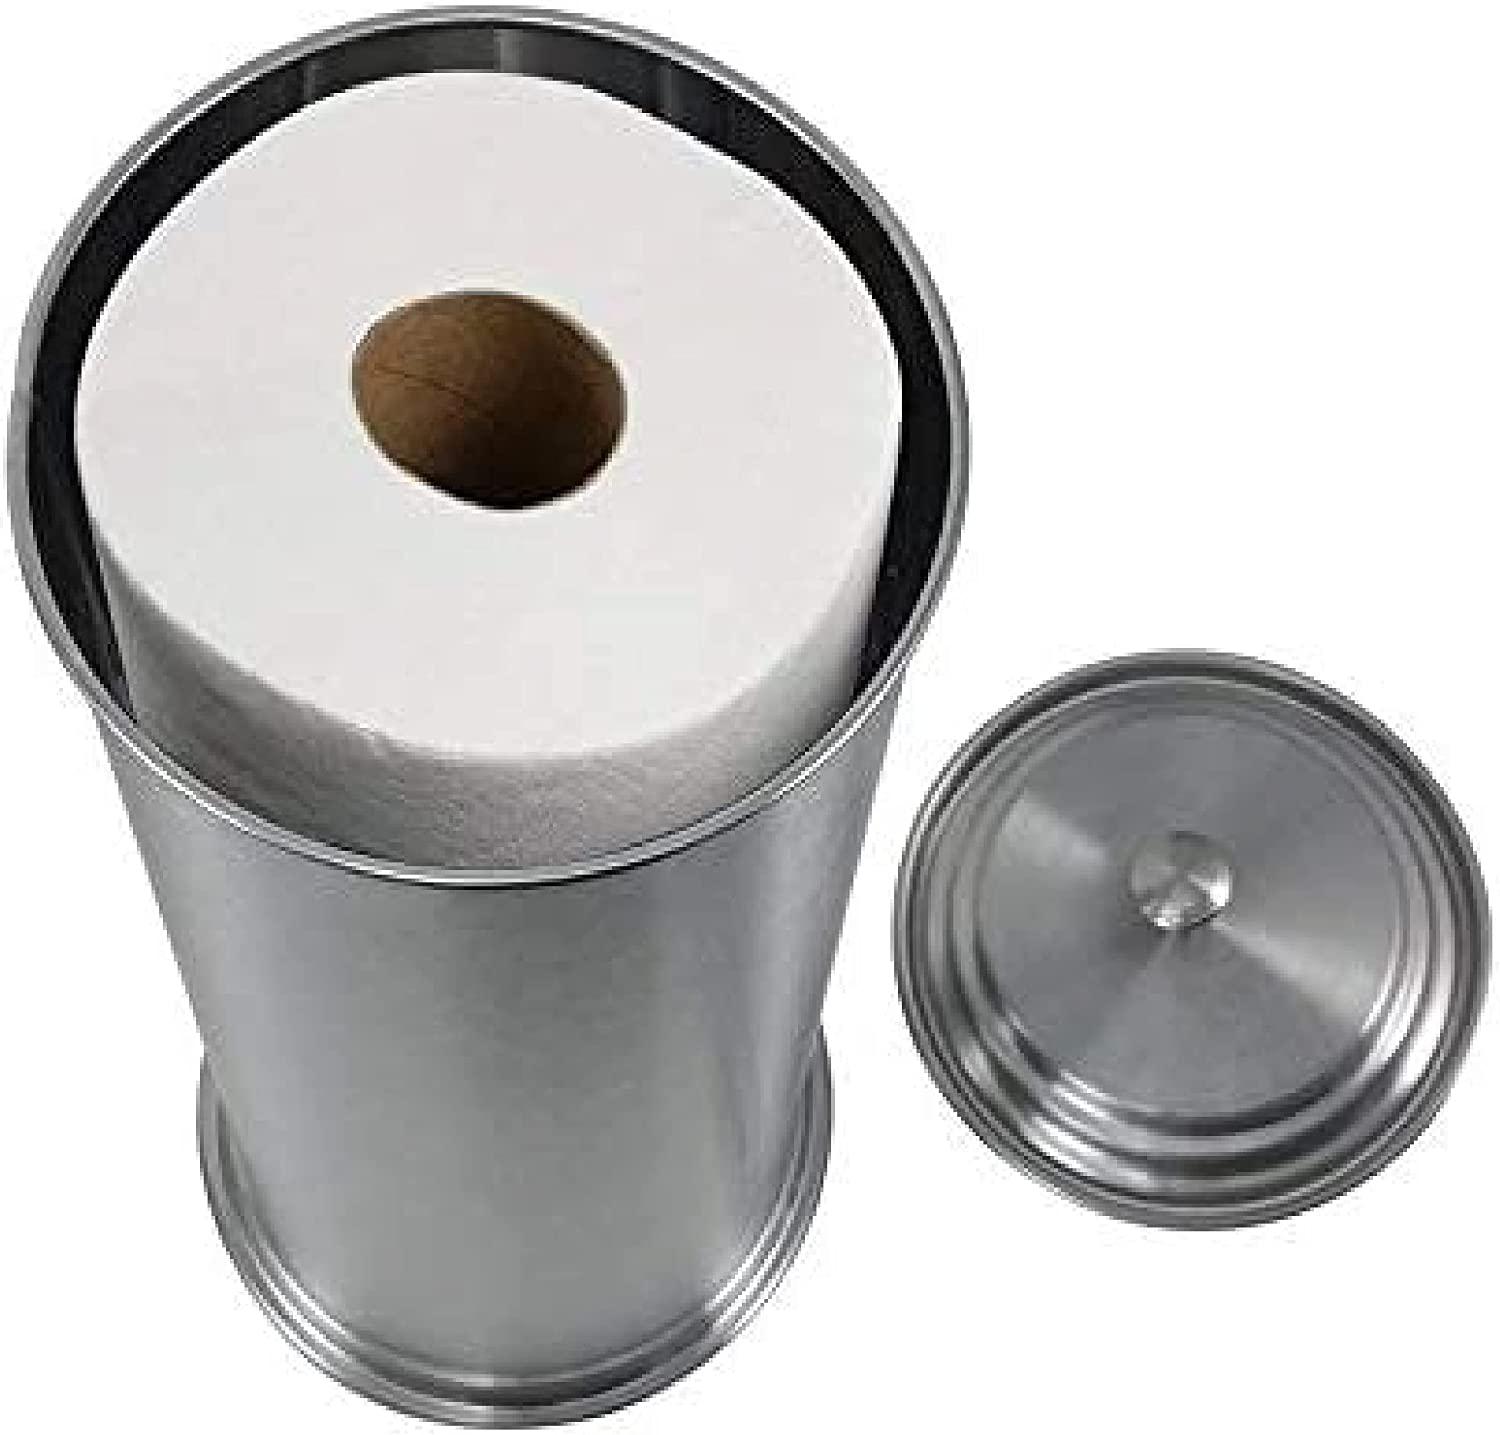 LDR Extra Toilet Paper Holder Brushed Nickel Finish